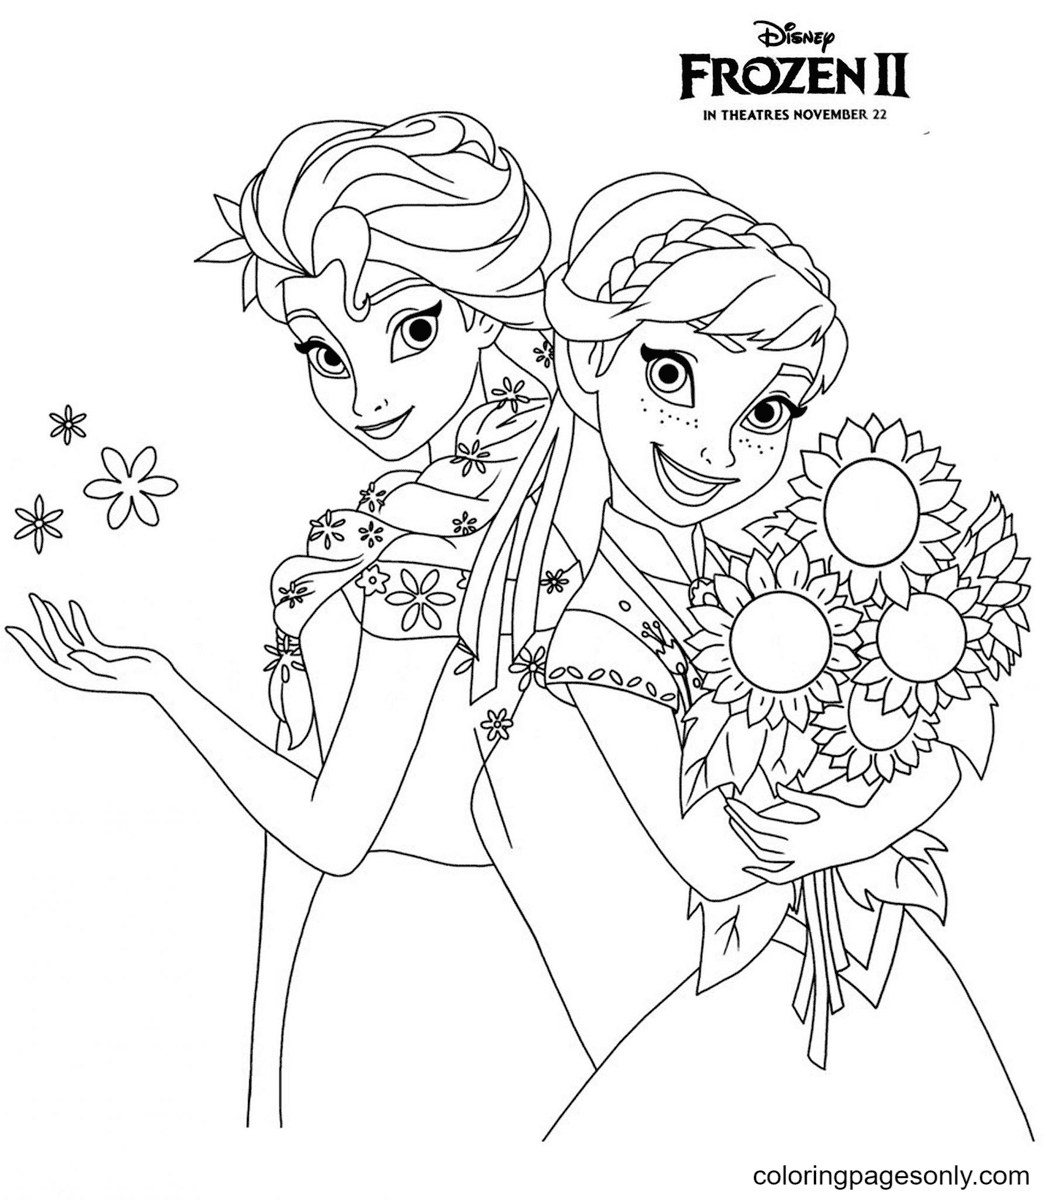 Desenho para colorir da princesa Anna Elsa de Frozen II